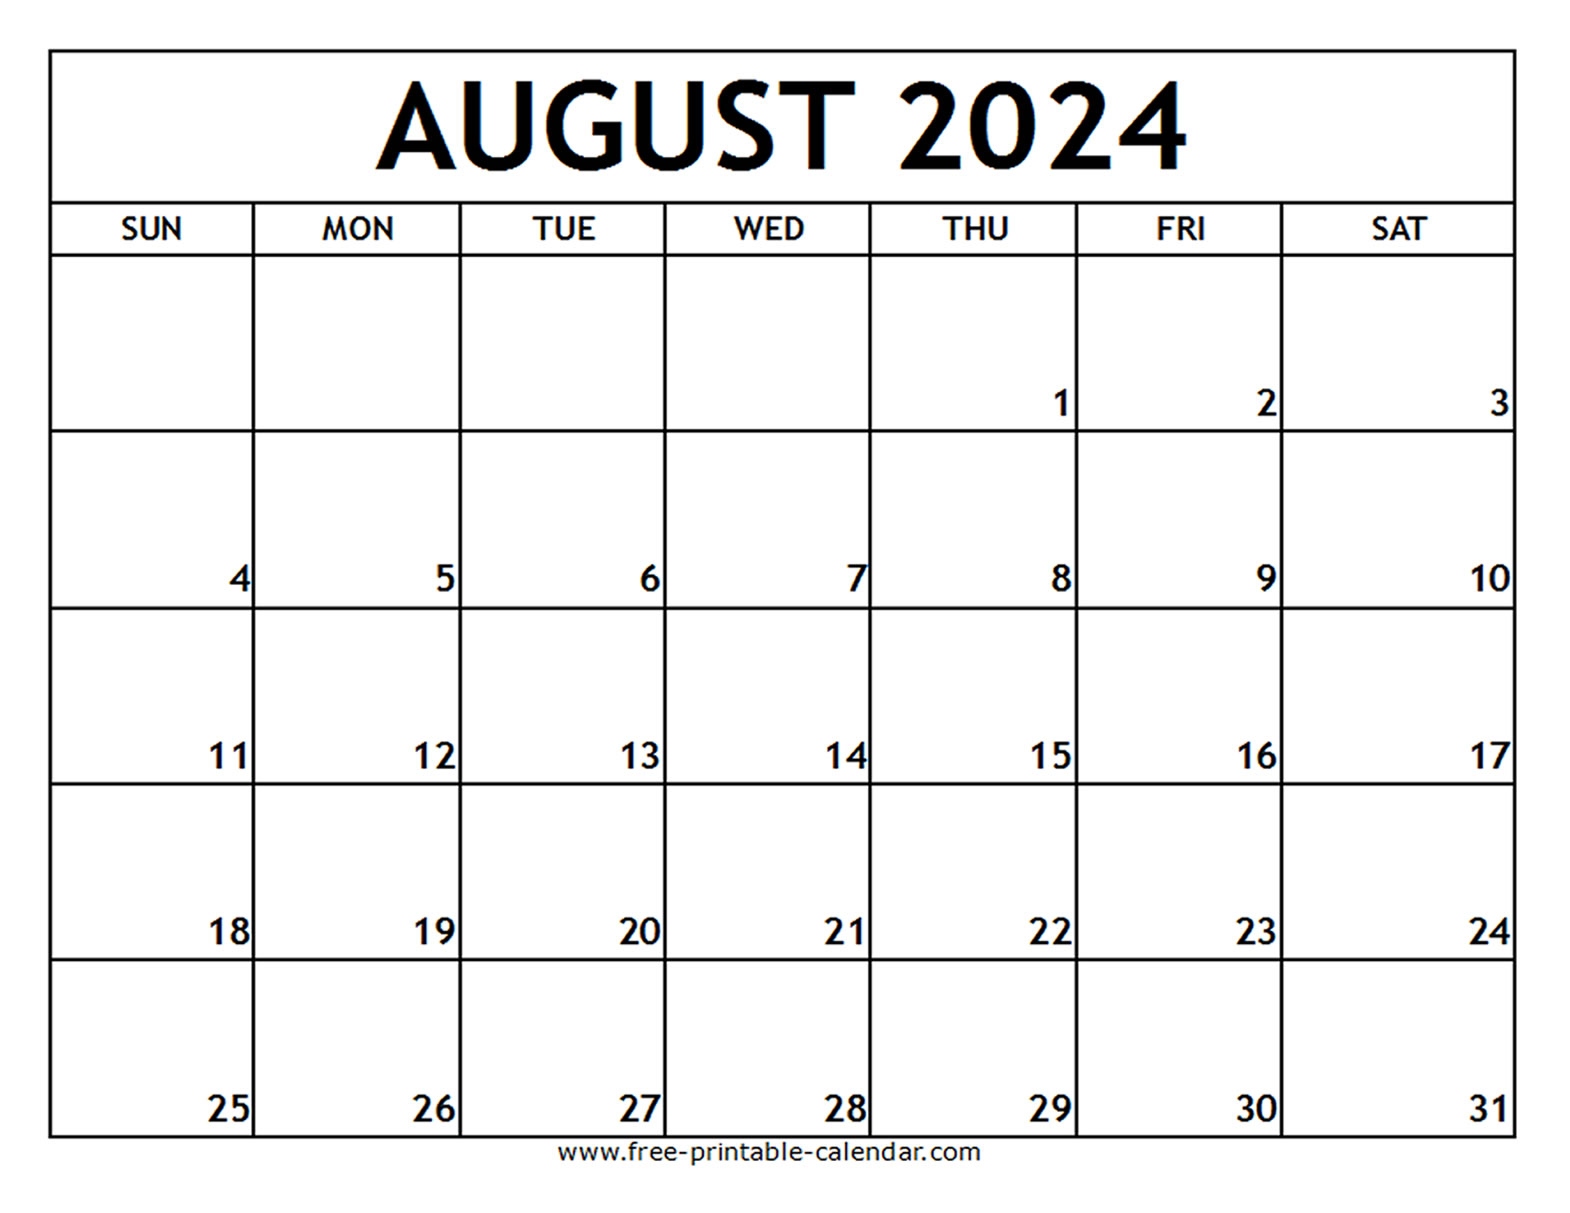 August 2024 Printable Calendar - Free-Printable-Calendar within Free Printable August 2024 Calendar Word